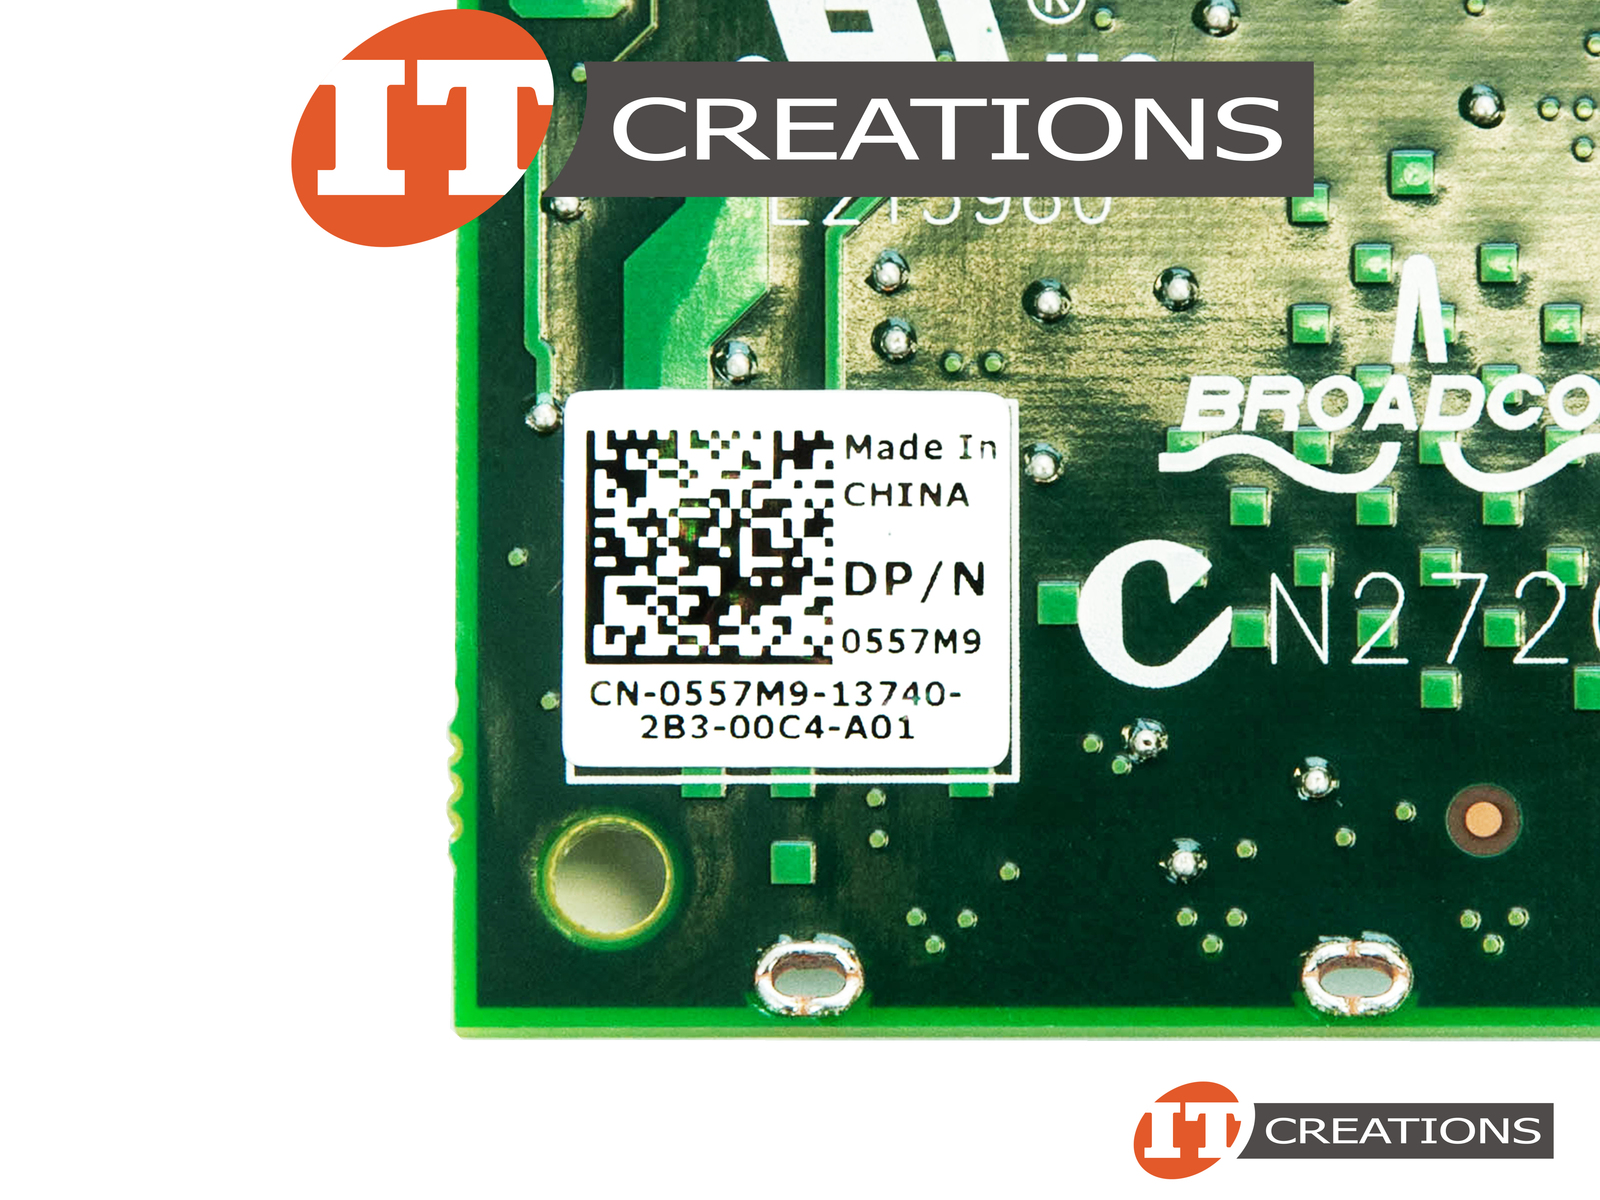 557M9-LOW P DELL / BROADCOM 5720 NIC 1GBE DUAL PORT PCI-E 2.0 X1